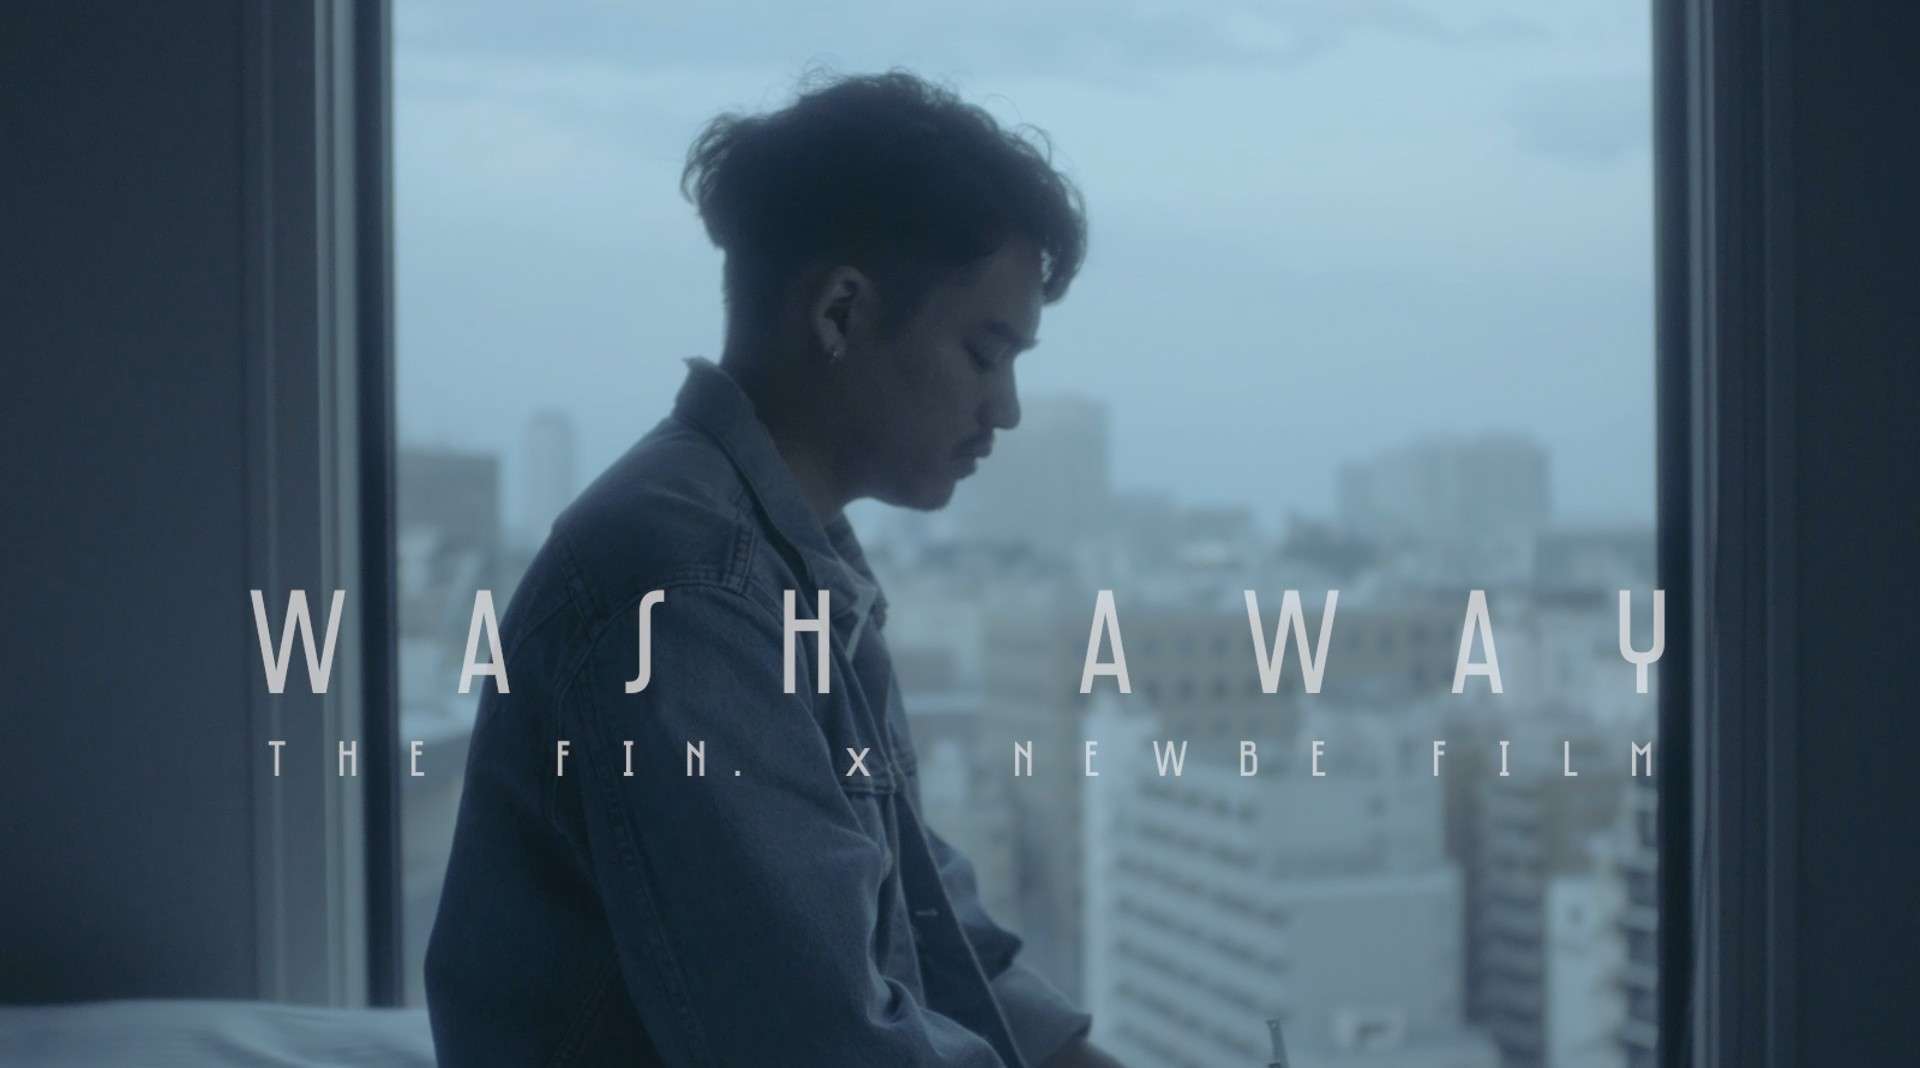 WASH AWAY - THE FIN. X NEWBE FILM